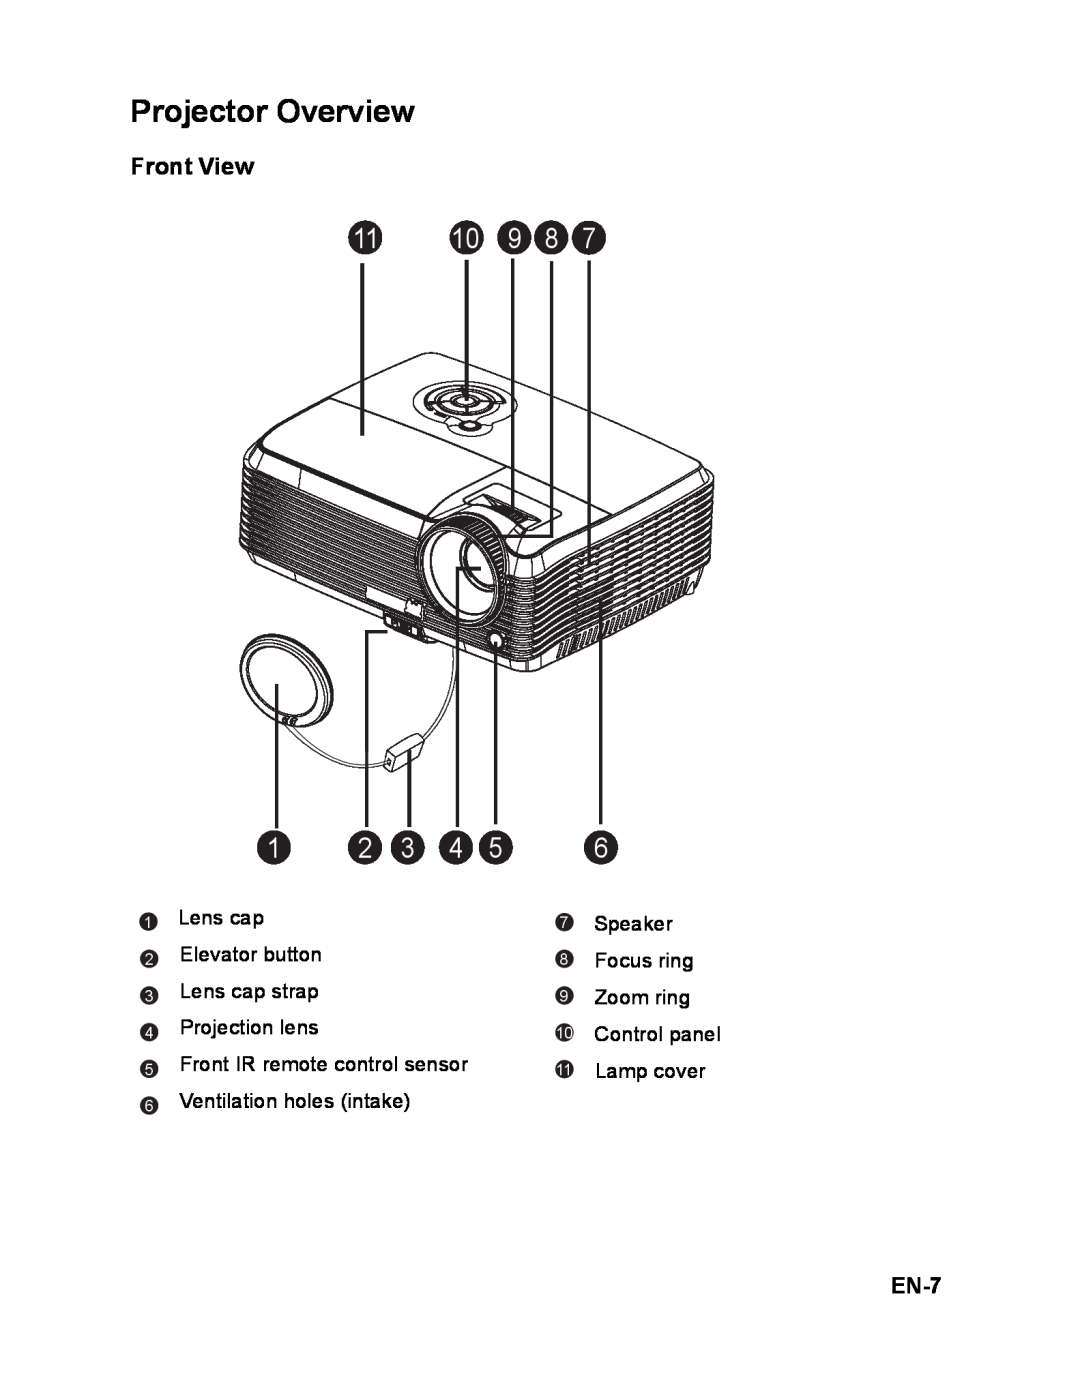 ViewSonic PJD6251 warranty Projector Overview, 11 10 9 8, Front View, EN-7, Lens cap, Speaker, Elevator button, Focus ring 